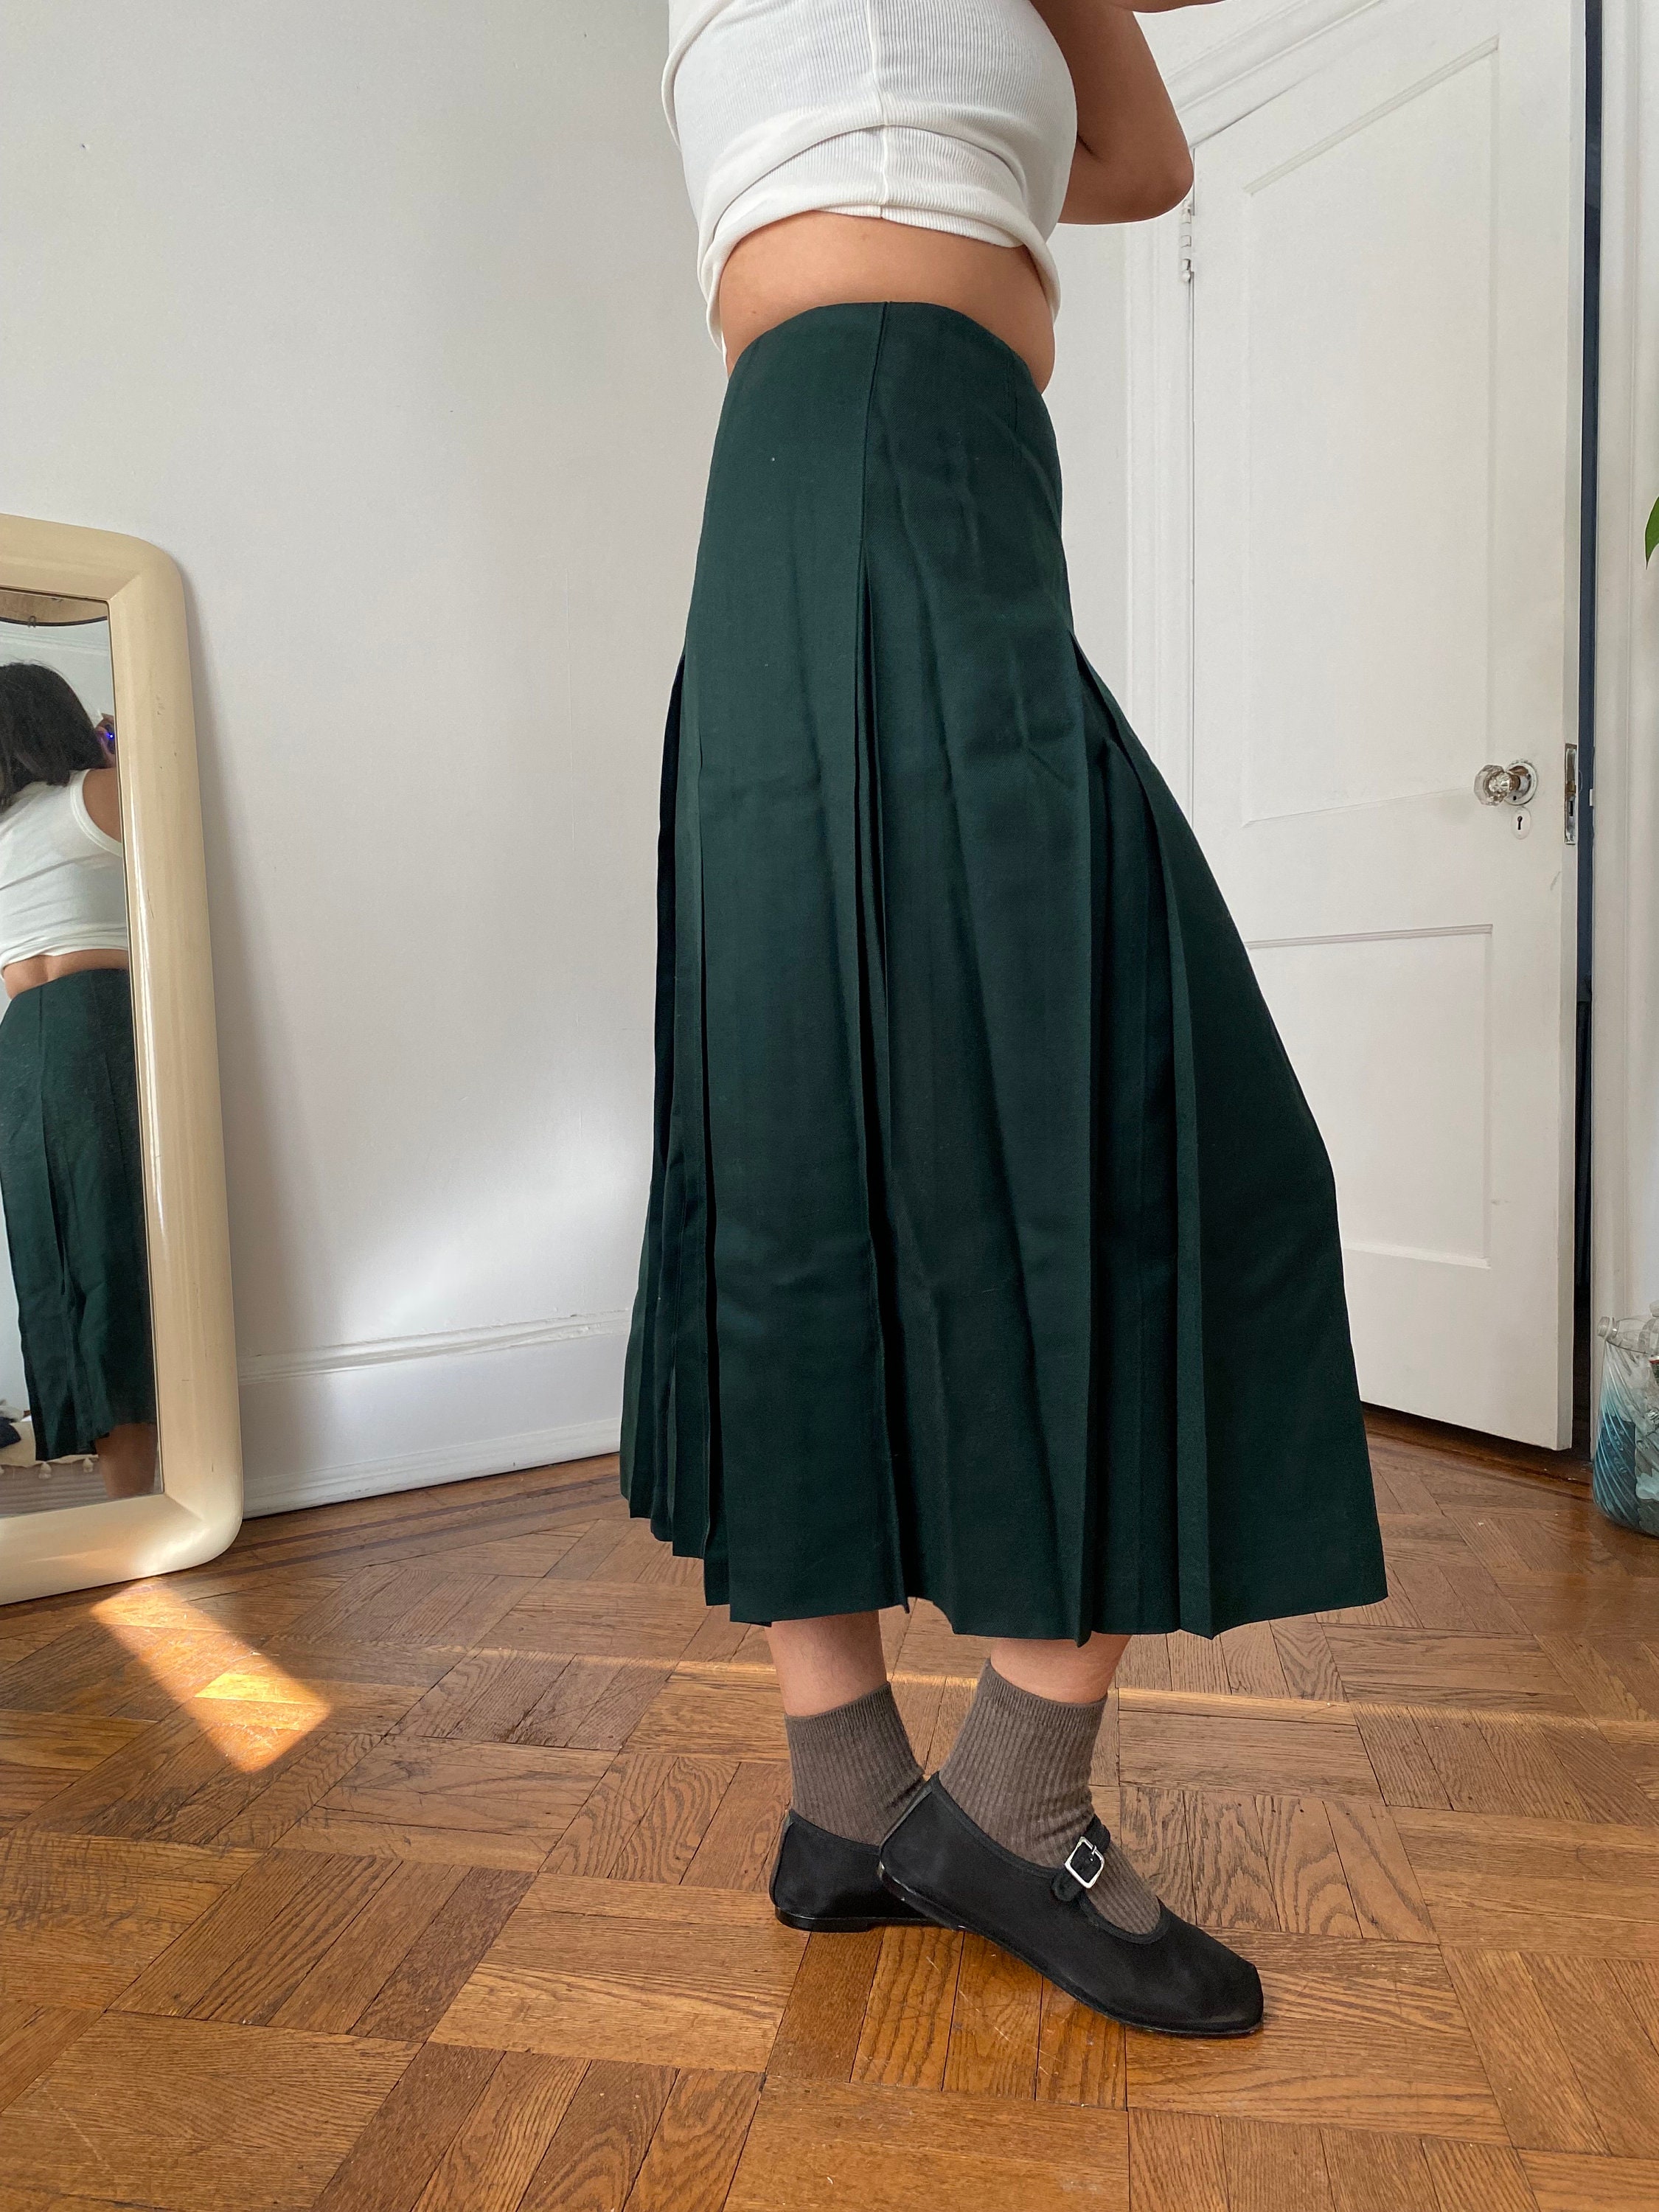 Modest Casual Skirt 